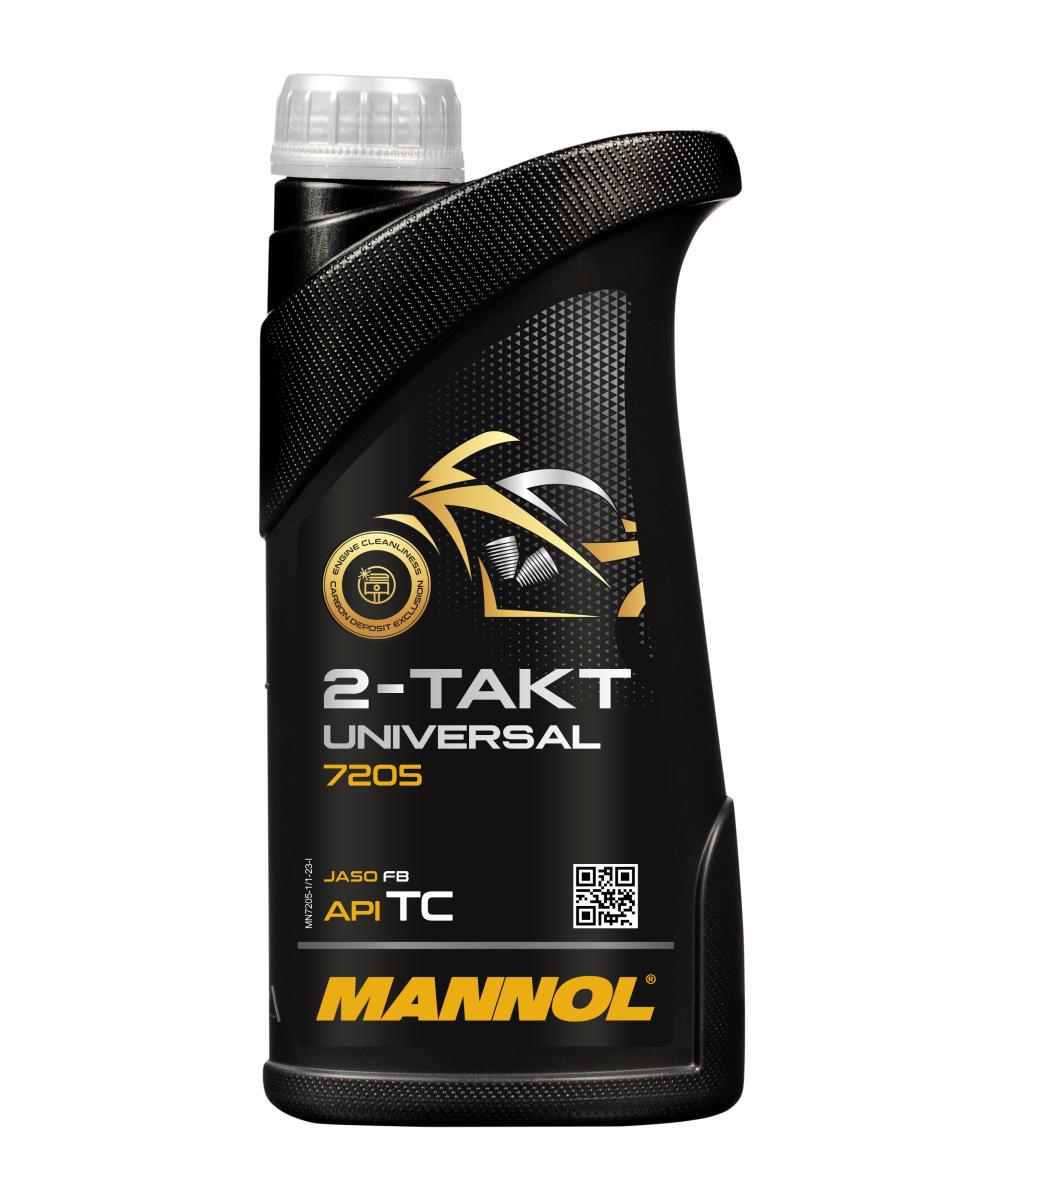 1 Liter MANNOL 2-Takt Universal 7205 API TC JASO FB ISO L-EGD Motoröl Motorradöl